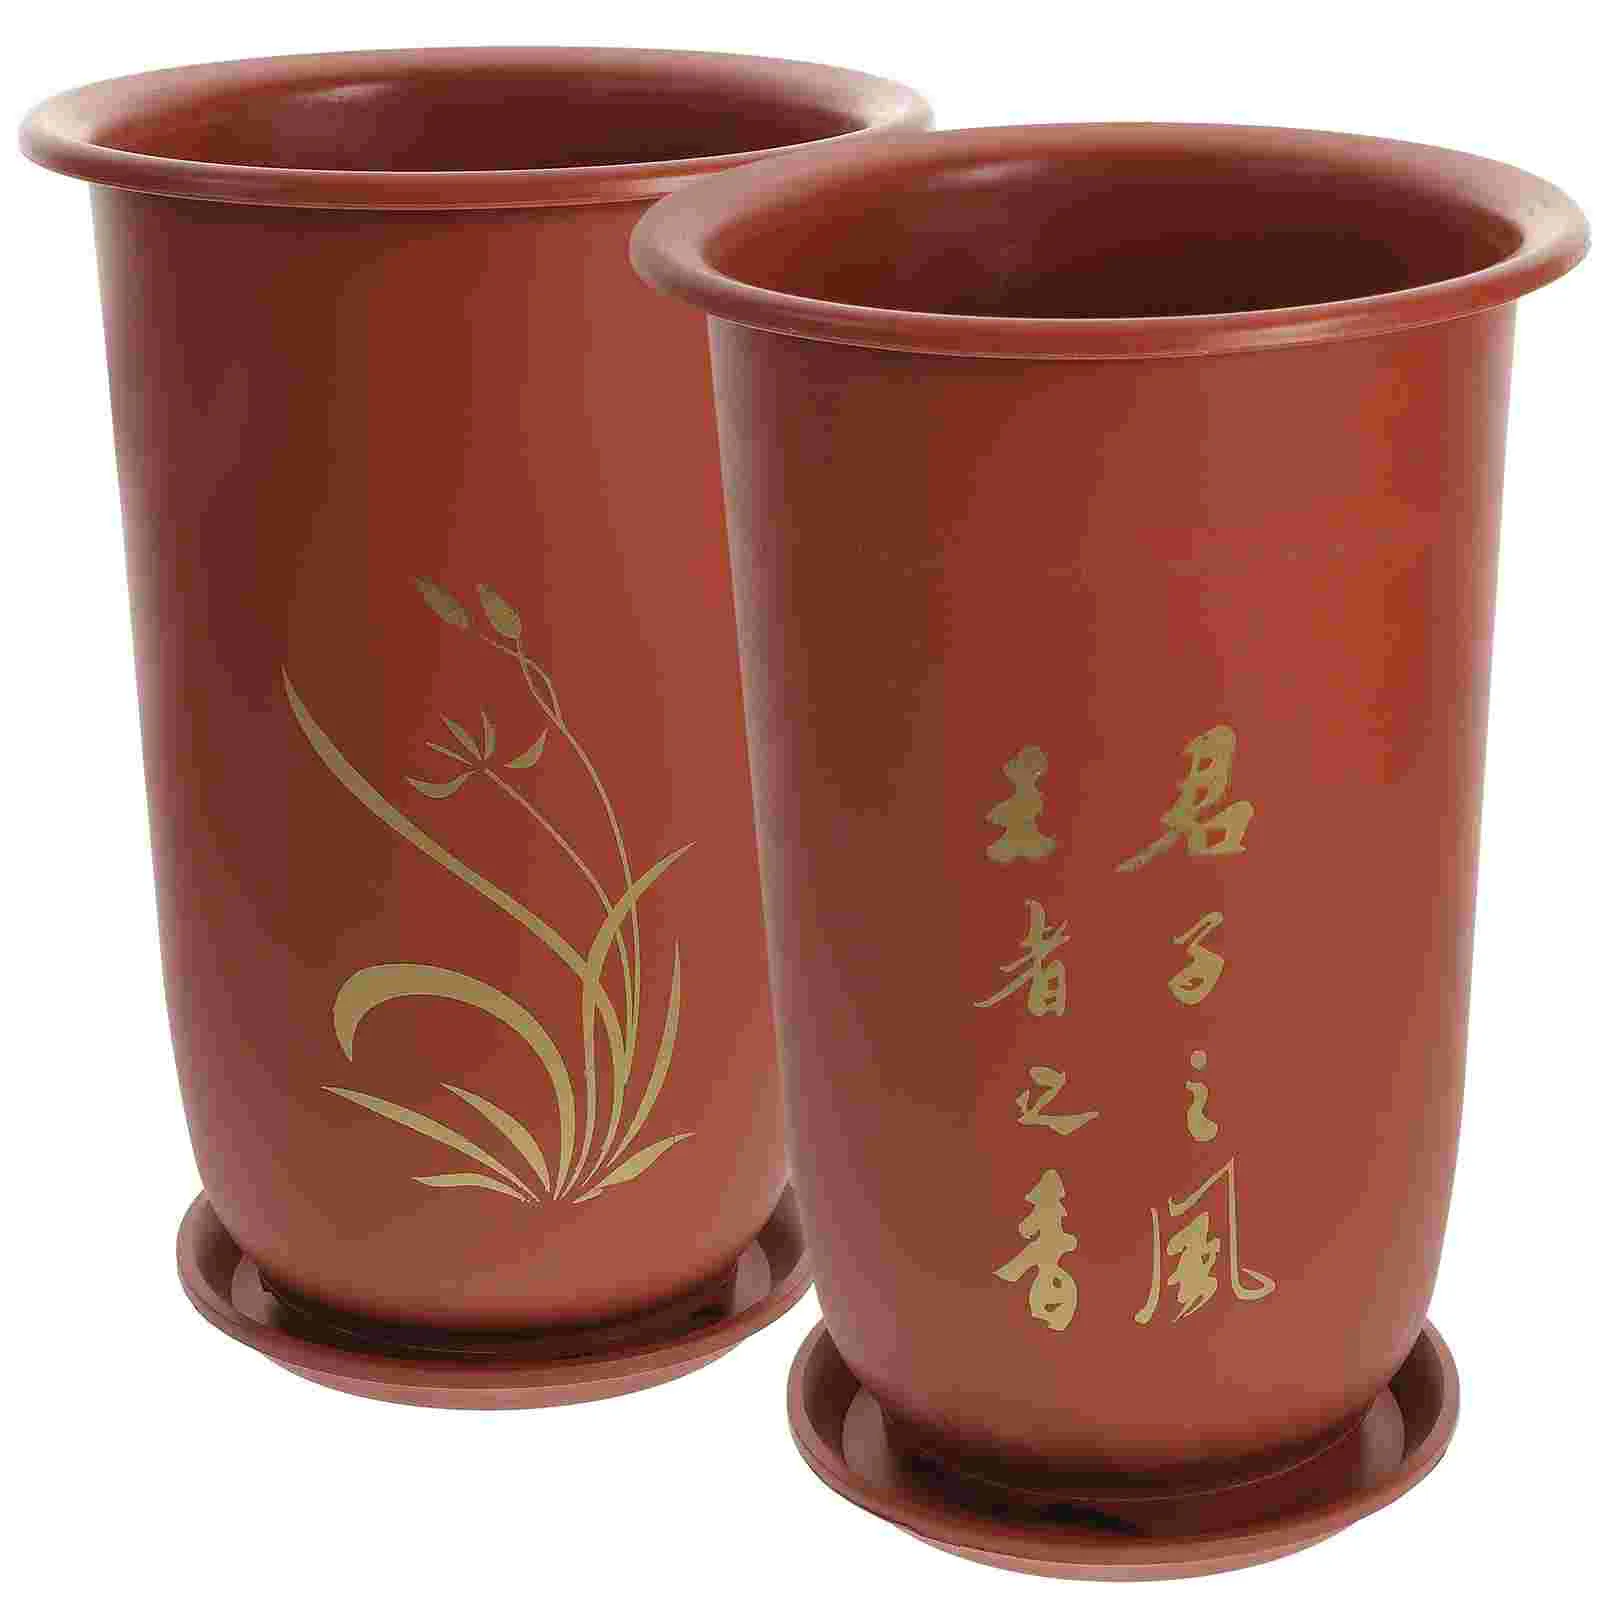 

Orchid Flower Pot Vintage Chinese Style Decorative Flowerpot Display Stand Resin Planter Succulent Pots Cactus Bonsai